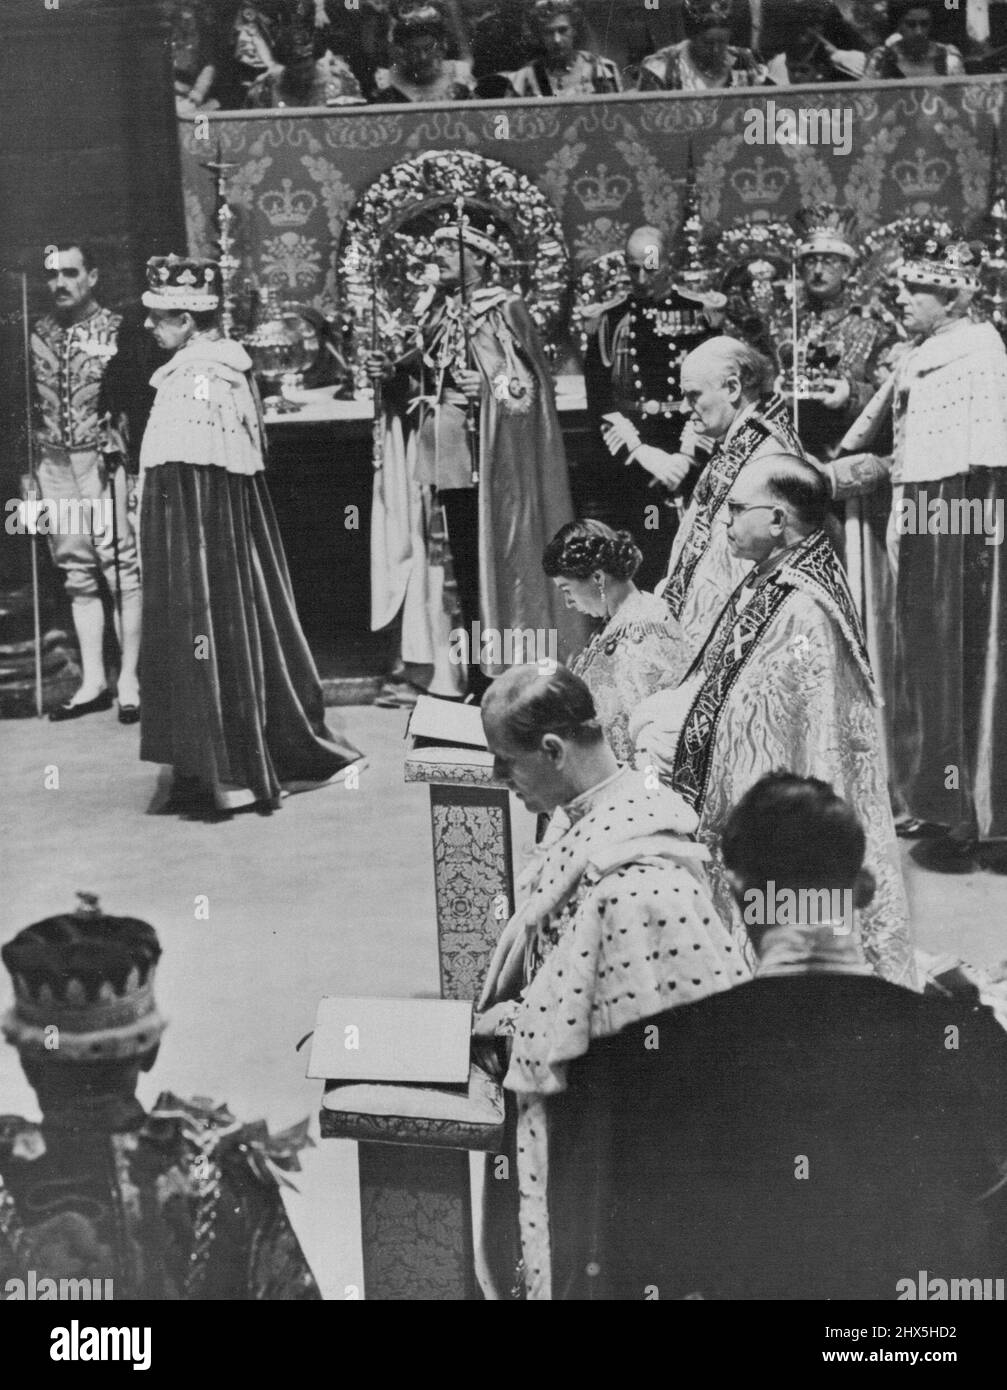 Queen Elizabeth II Coronation - 1953, Abbey Scenes - British Royalty. January 06, 1954. (Photo by The Associated Press Ltd.). Stock Photo